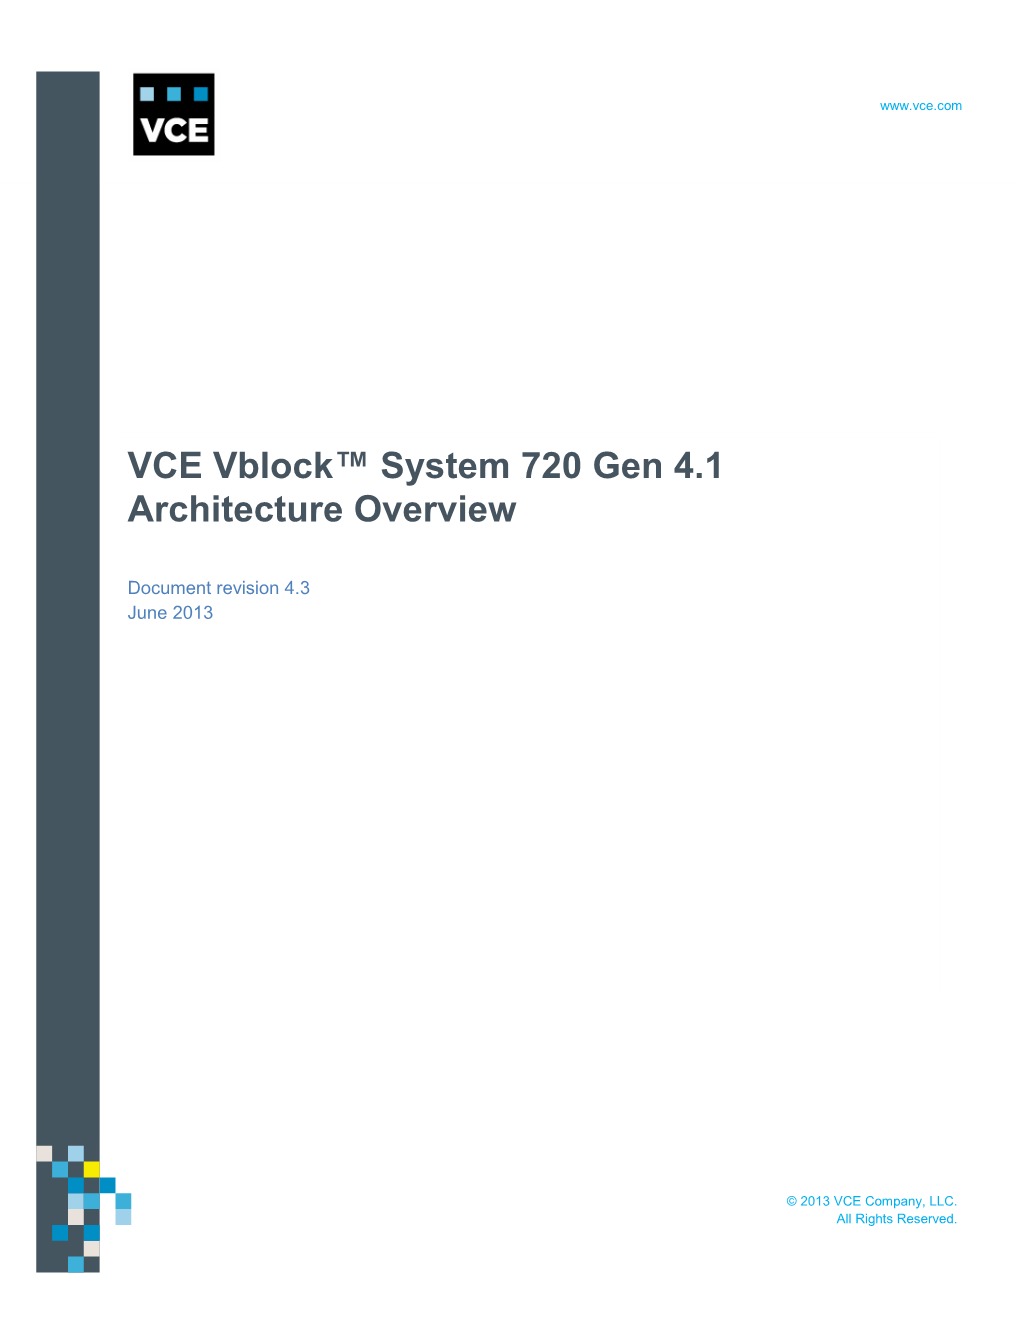 VCE Vblock™ System 720 Gen 4.1 Architecture Overview Revision History